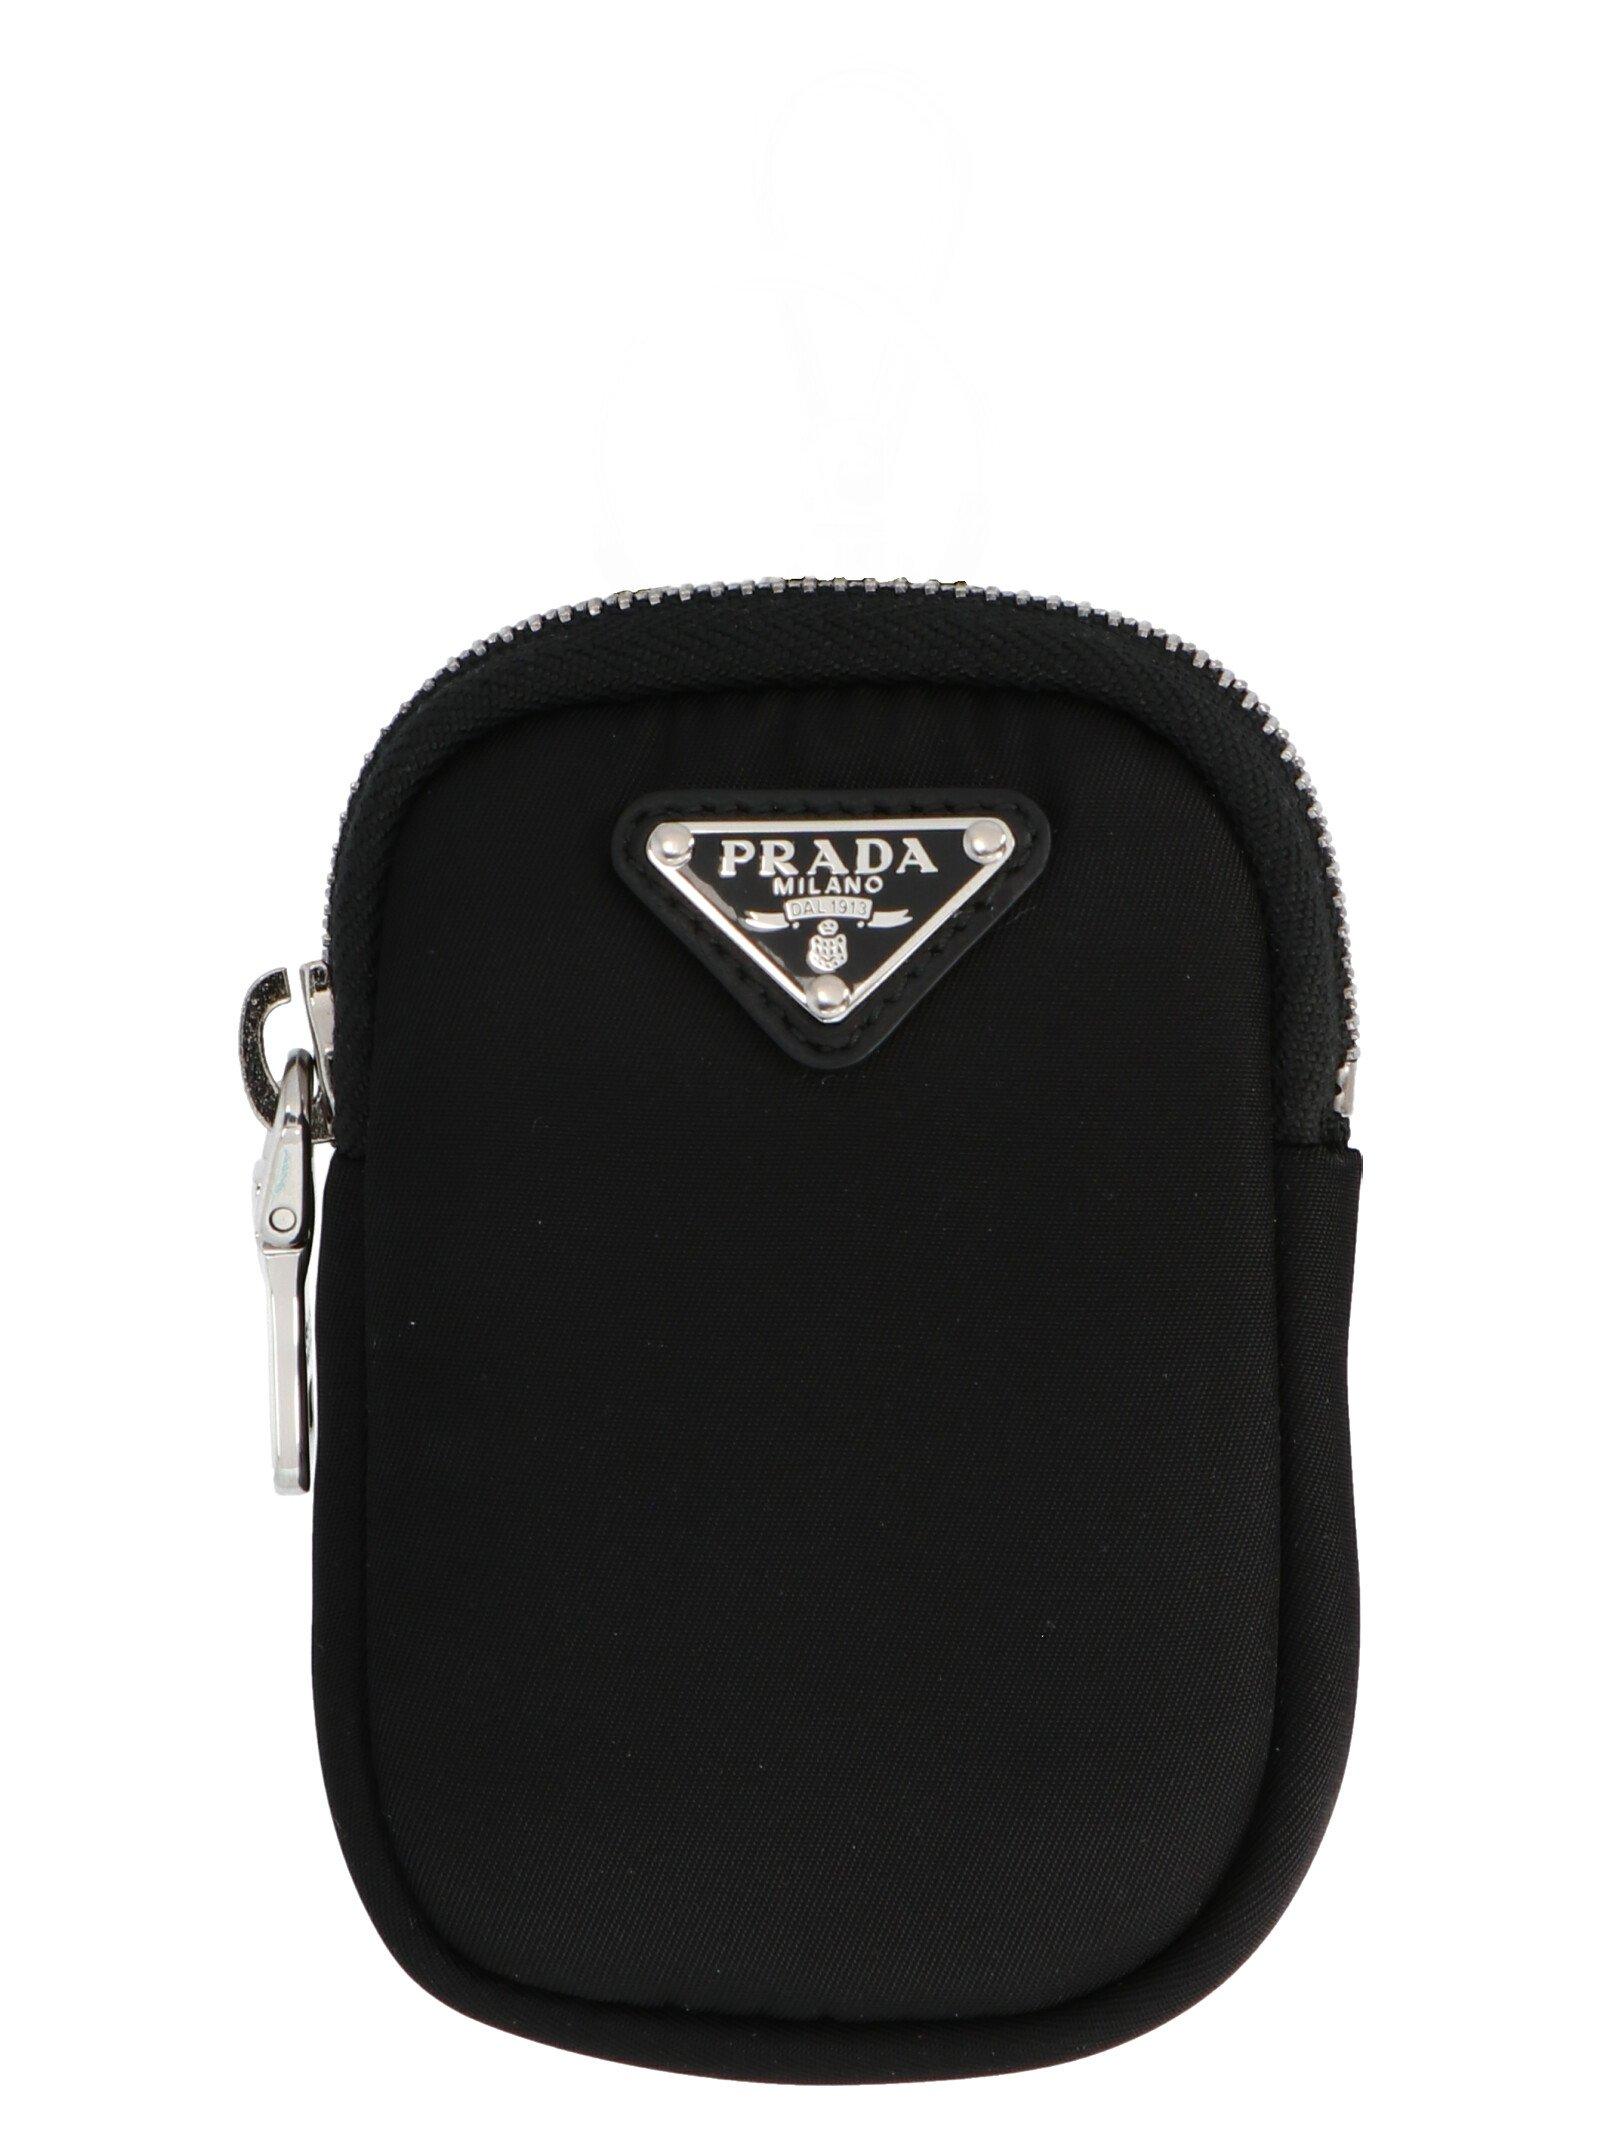 Prada Mini Crossbody Bag in Black - Lyst